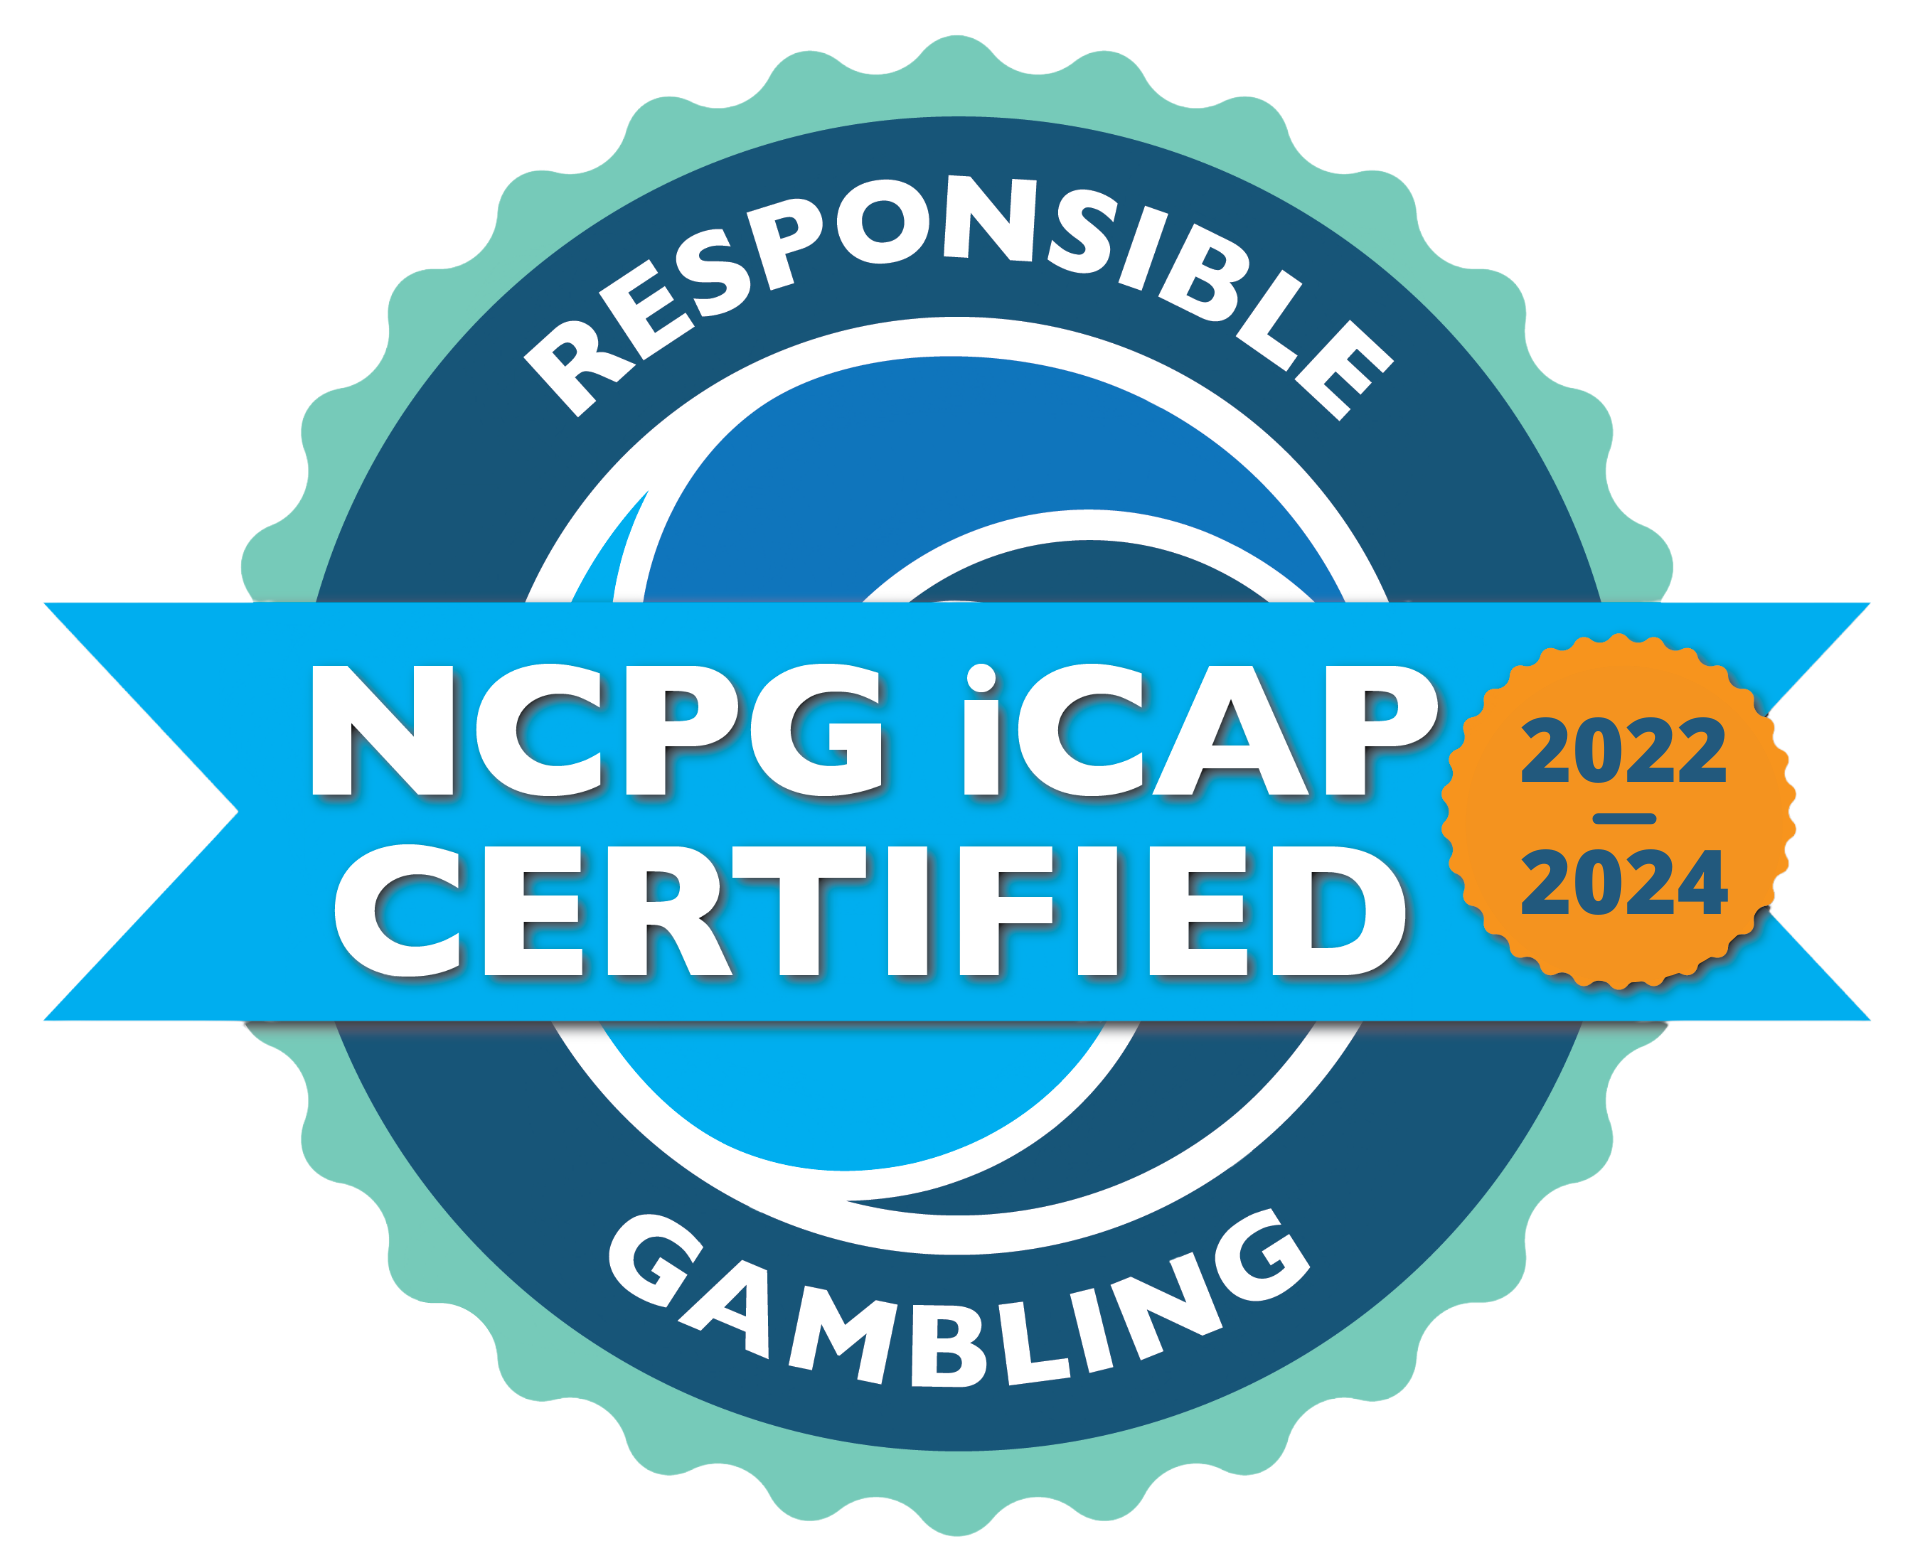 Responsible Gambling NCPG iCAP Certified 2022-2024